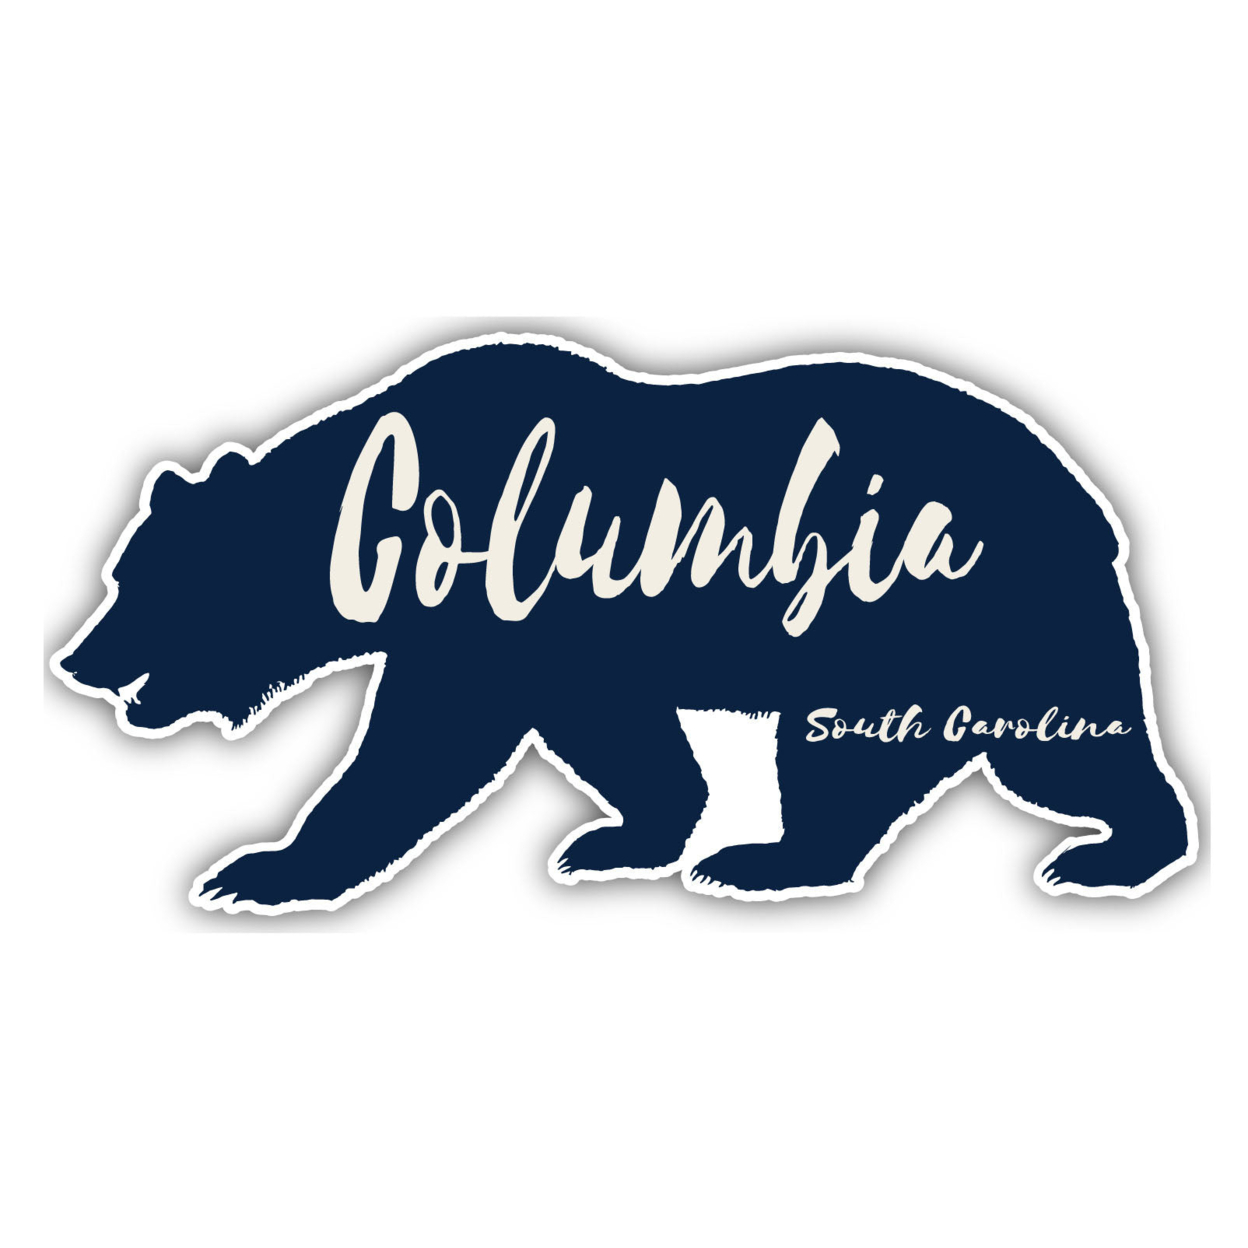 Columbia South Carolina Souvenir Decorative Stickers (Choose Theme And Size) - Single Unit, 6-Inch, Bear